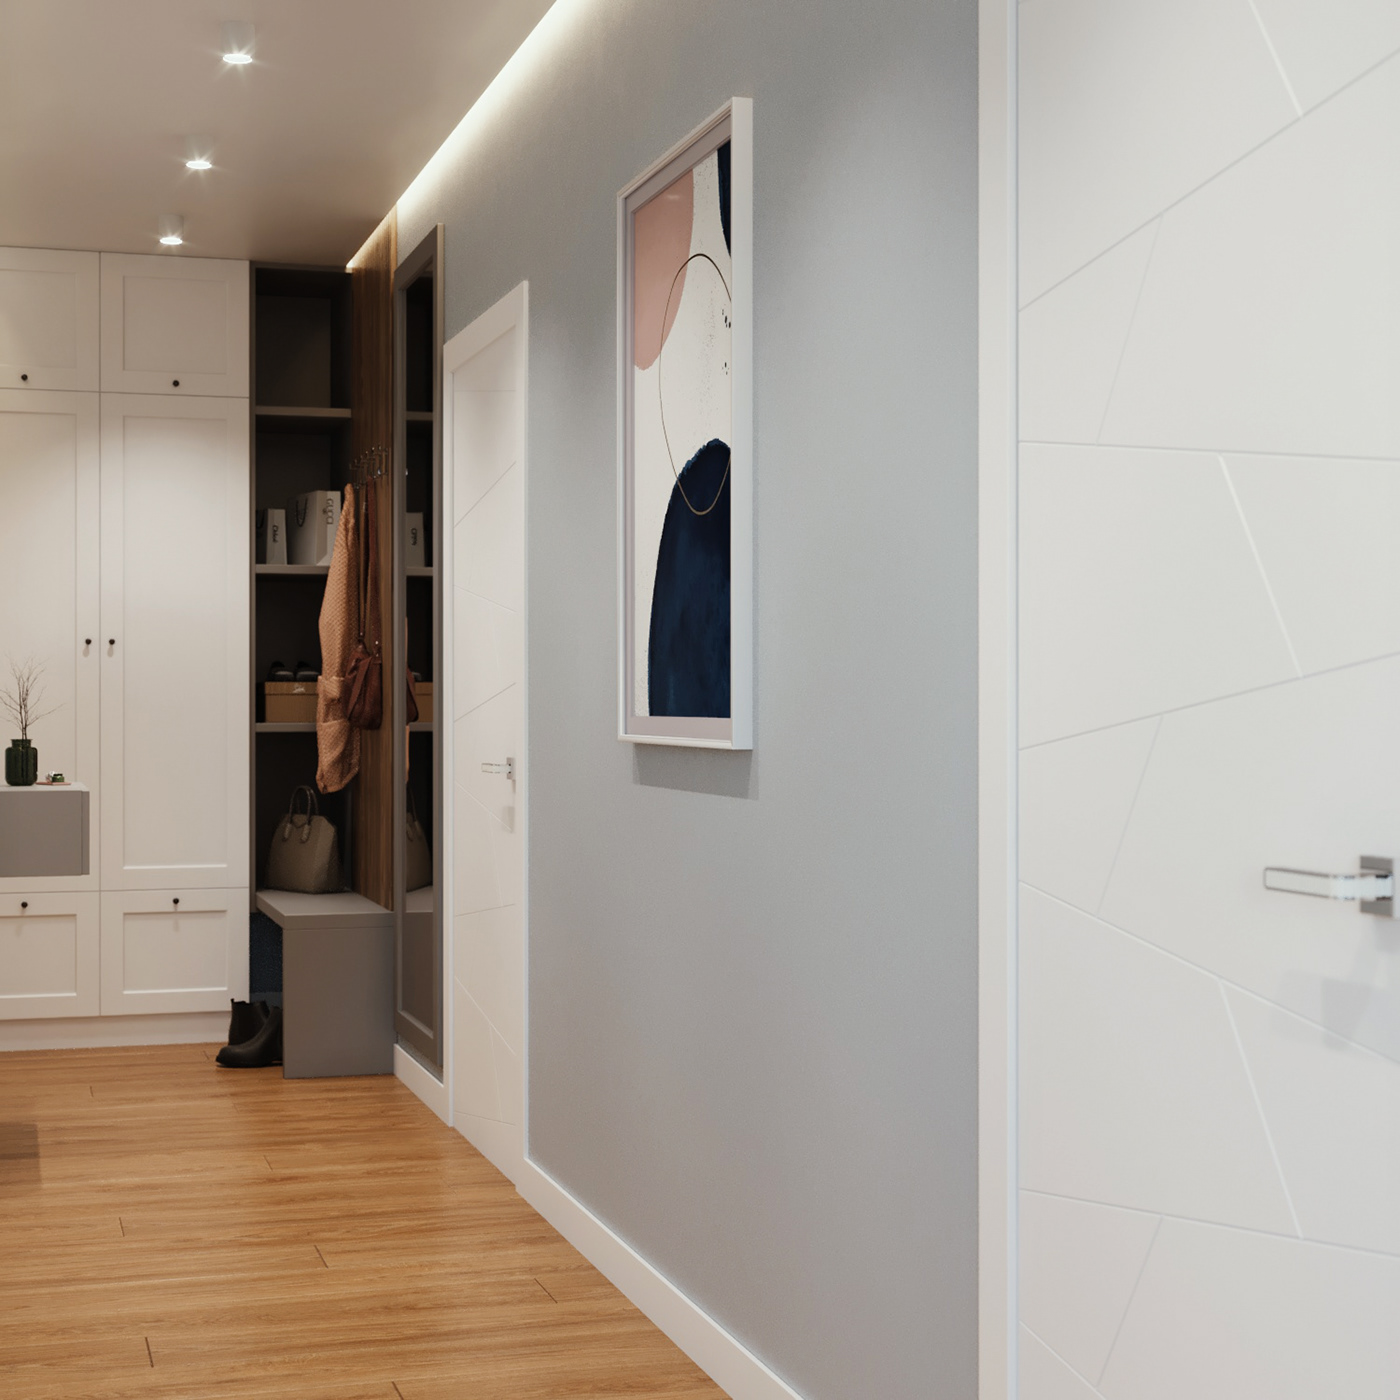 3dsmax corona Interior interior design  kitchen living room Render visualization